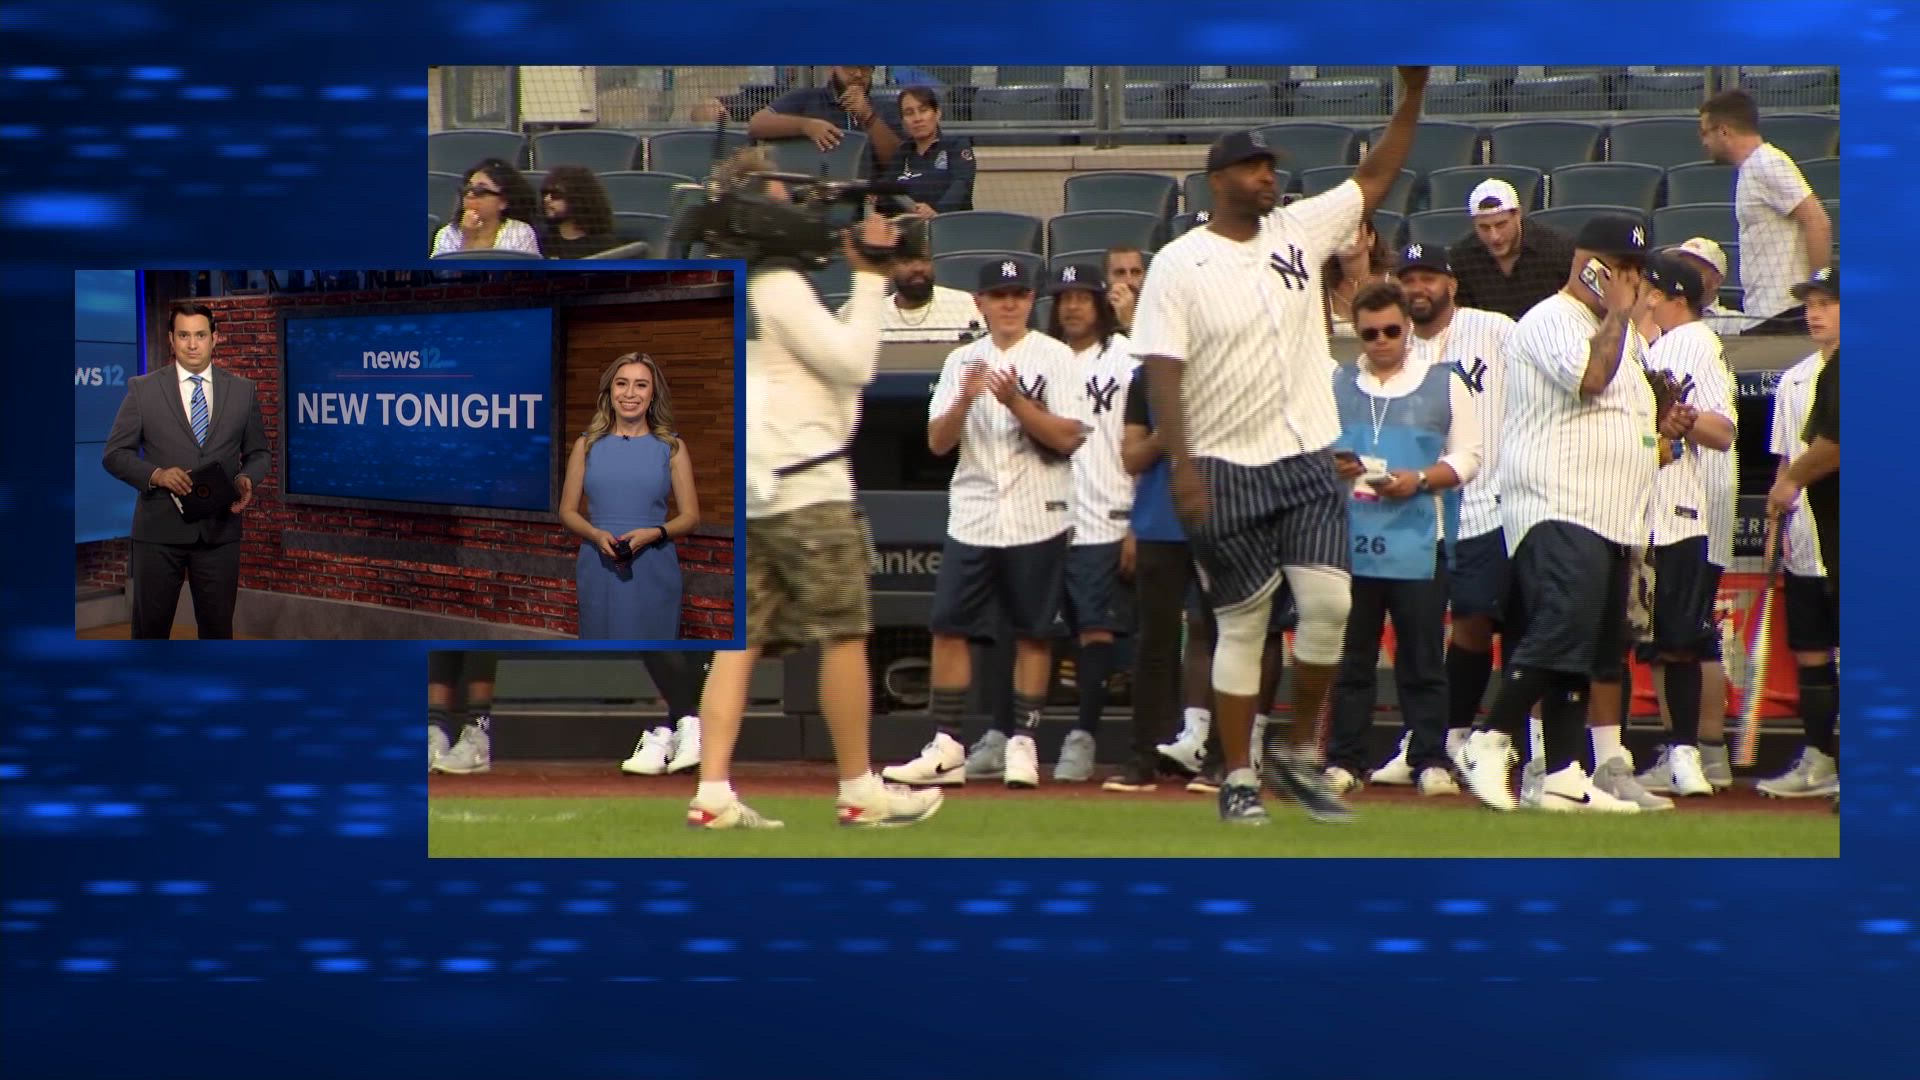 C.C. Sabathia hosts 3rd annual celebrity softball game at Yankee Stadium